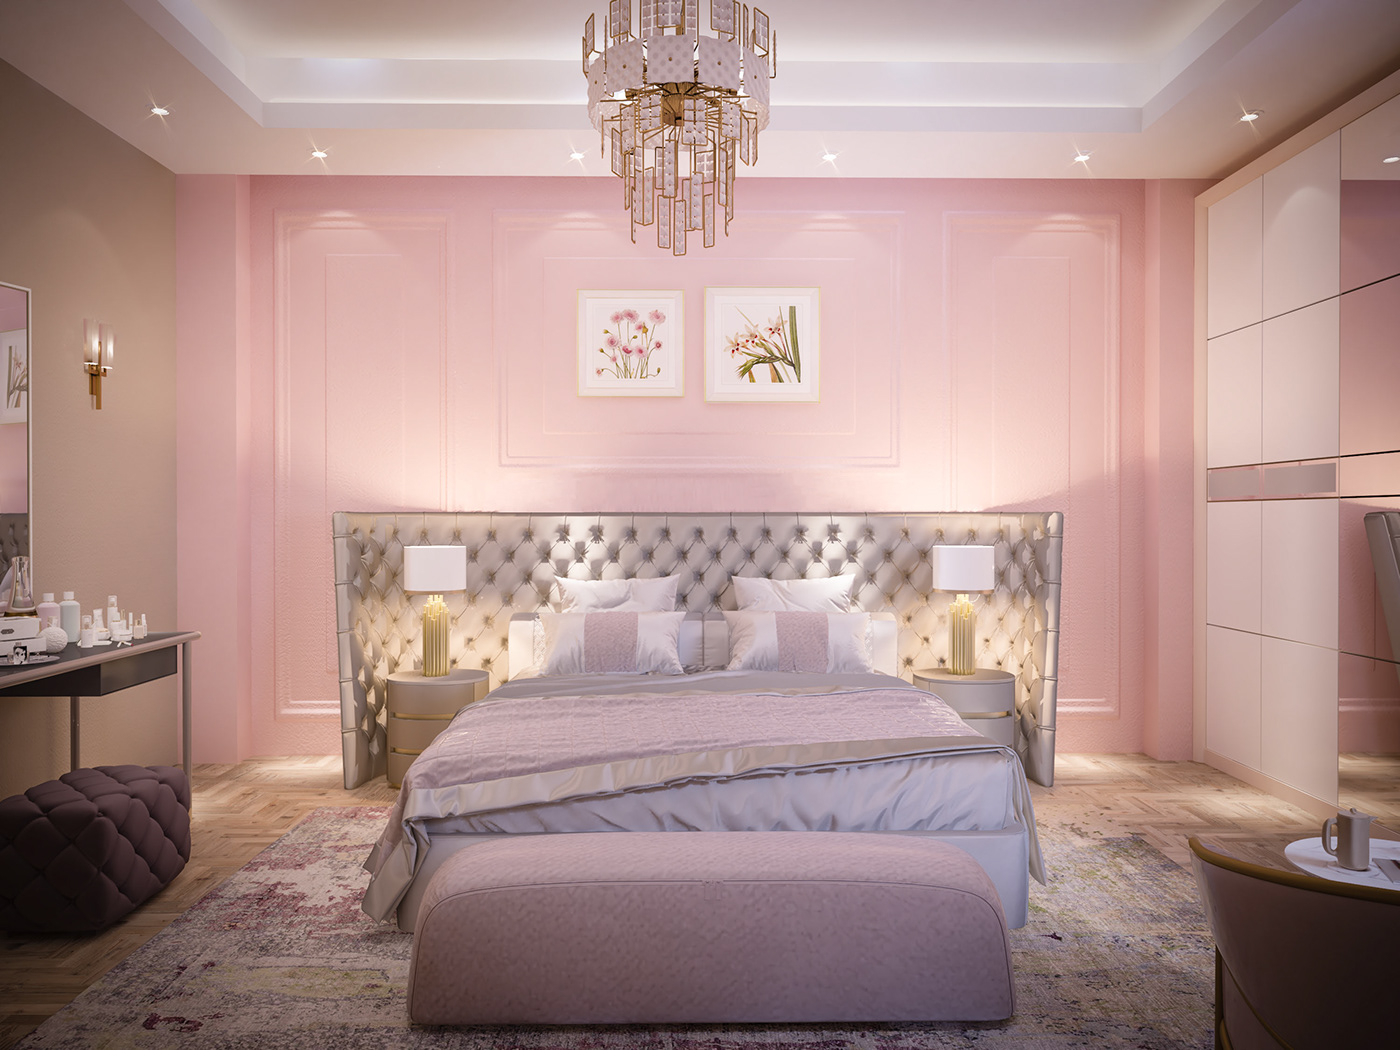 3d max arhitectures interior desgin photoshop pink bedroom small area visualiation